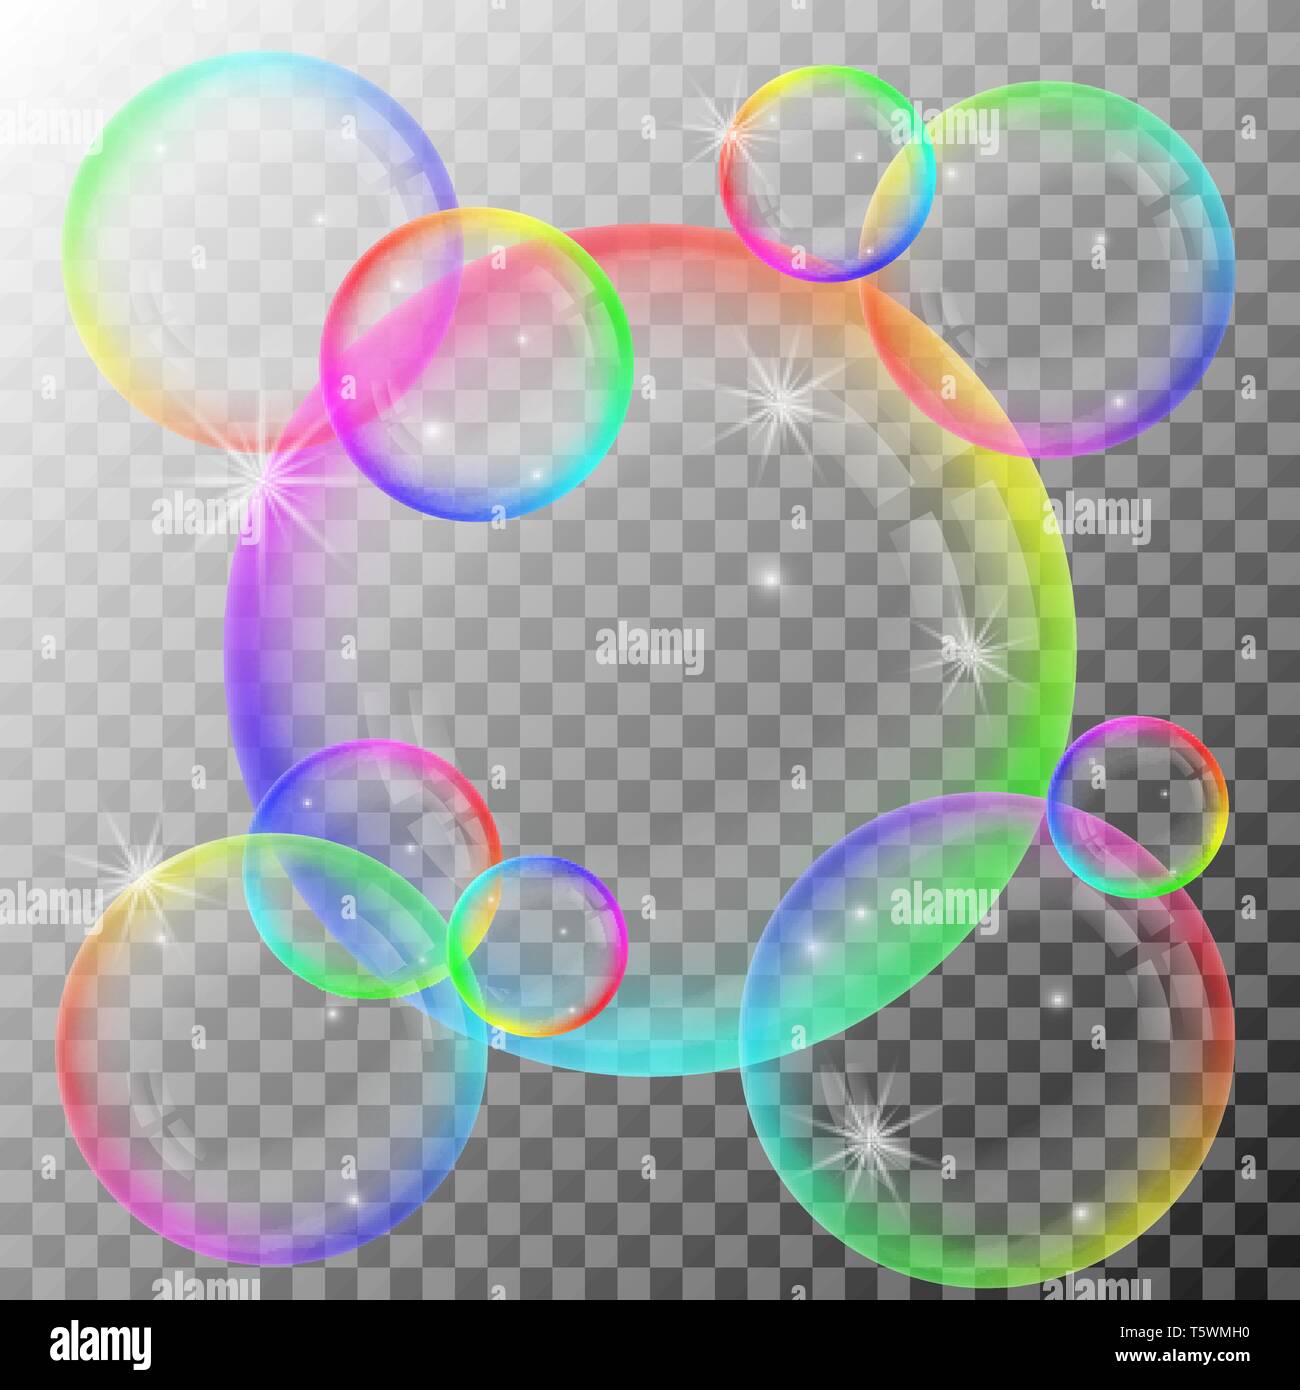 Bunte Seifenblasen Vektor Grafik Mit Transparentem Hintergrund Stock Vektorgrafik Alamy